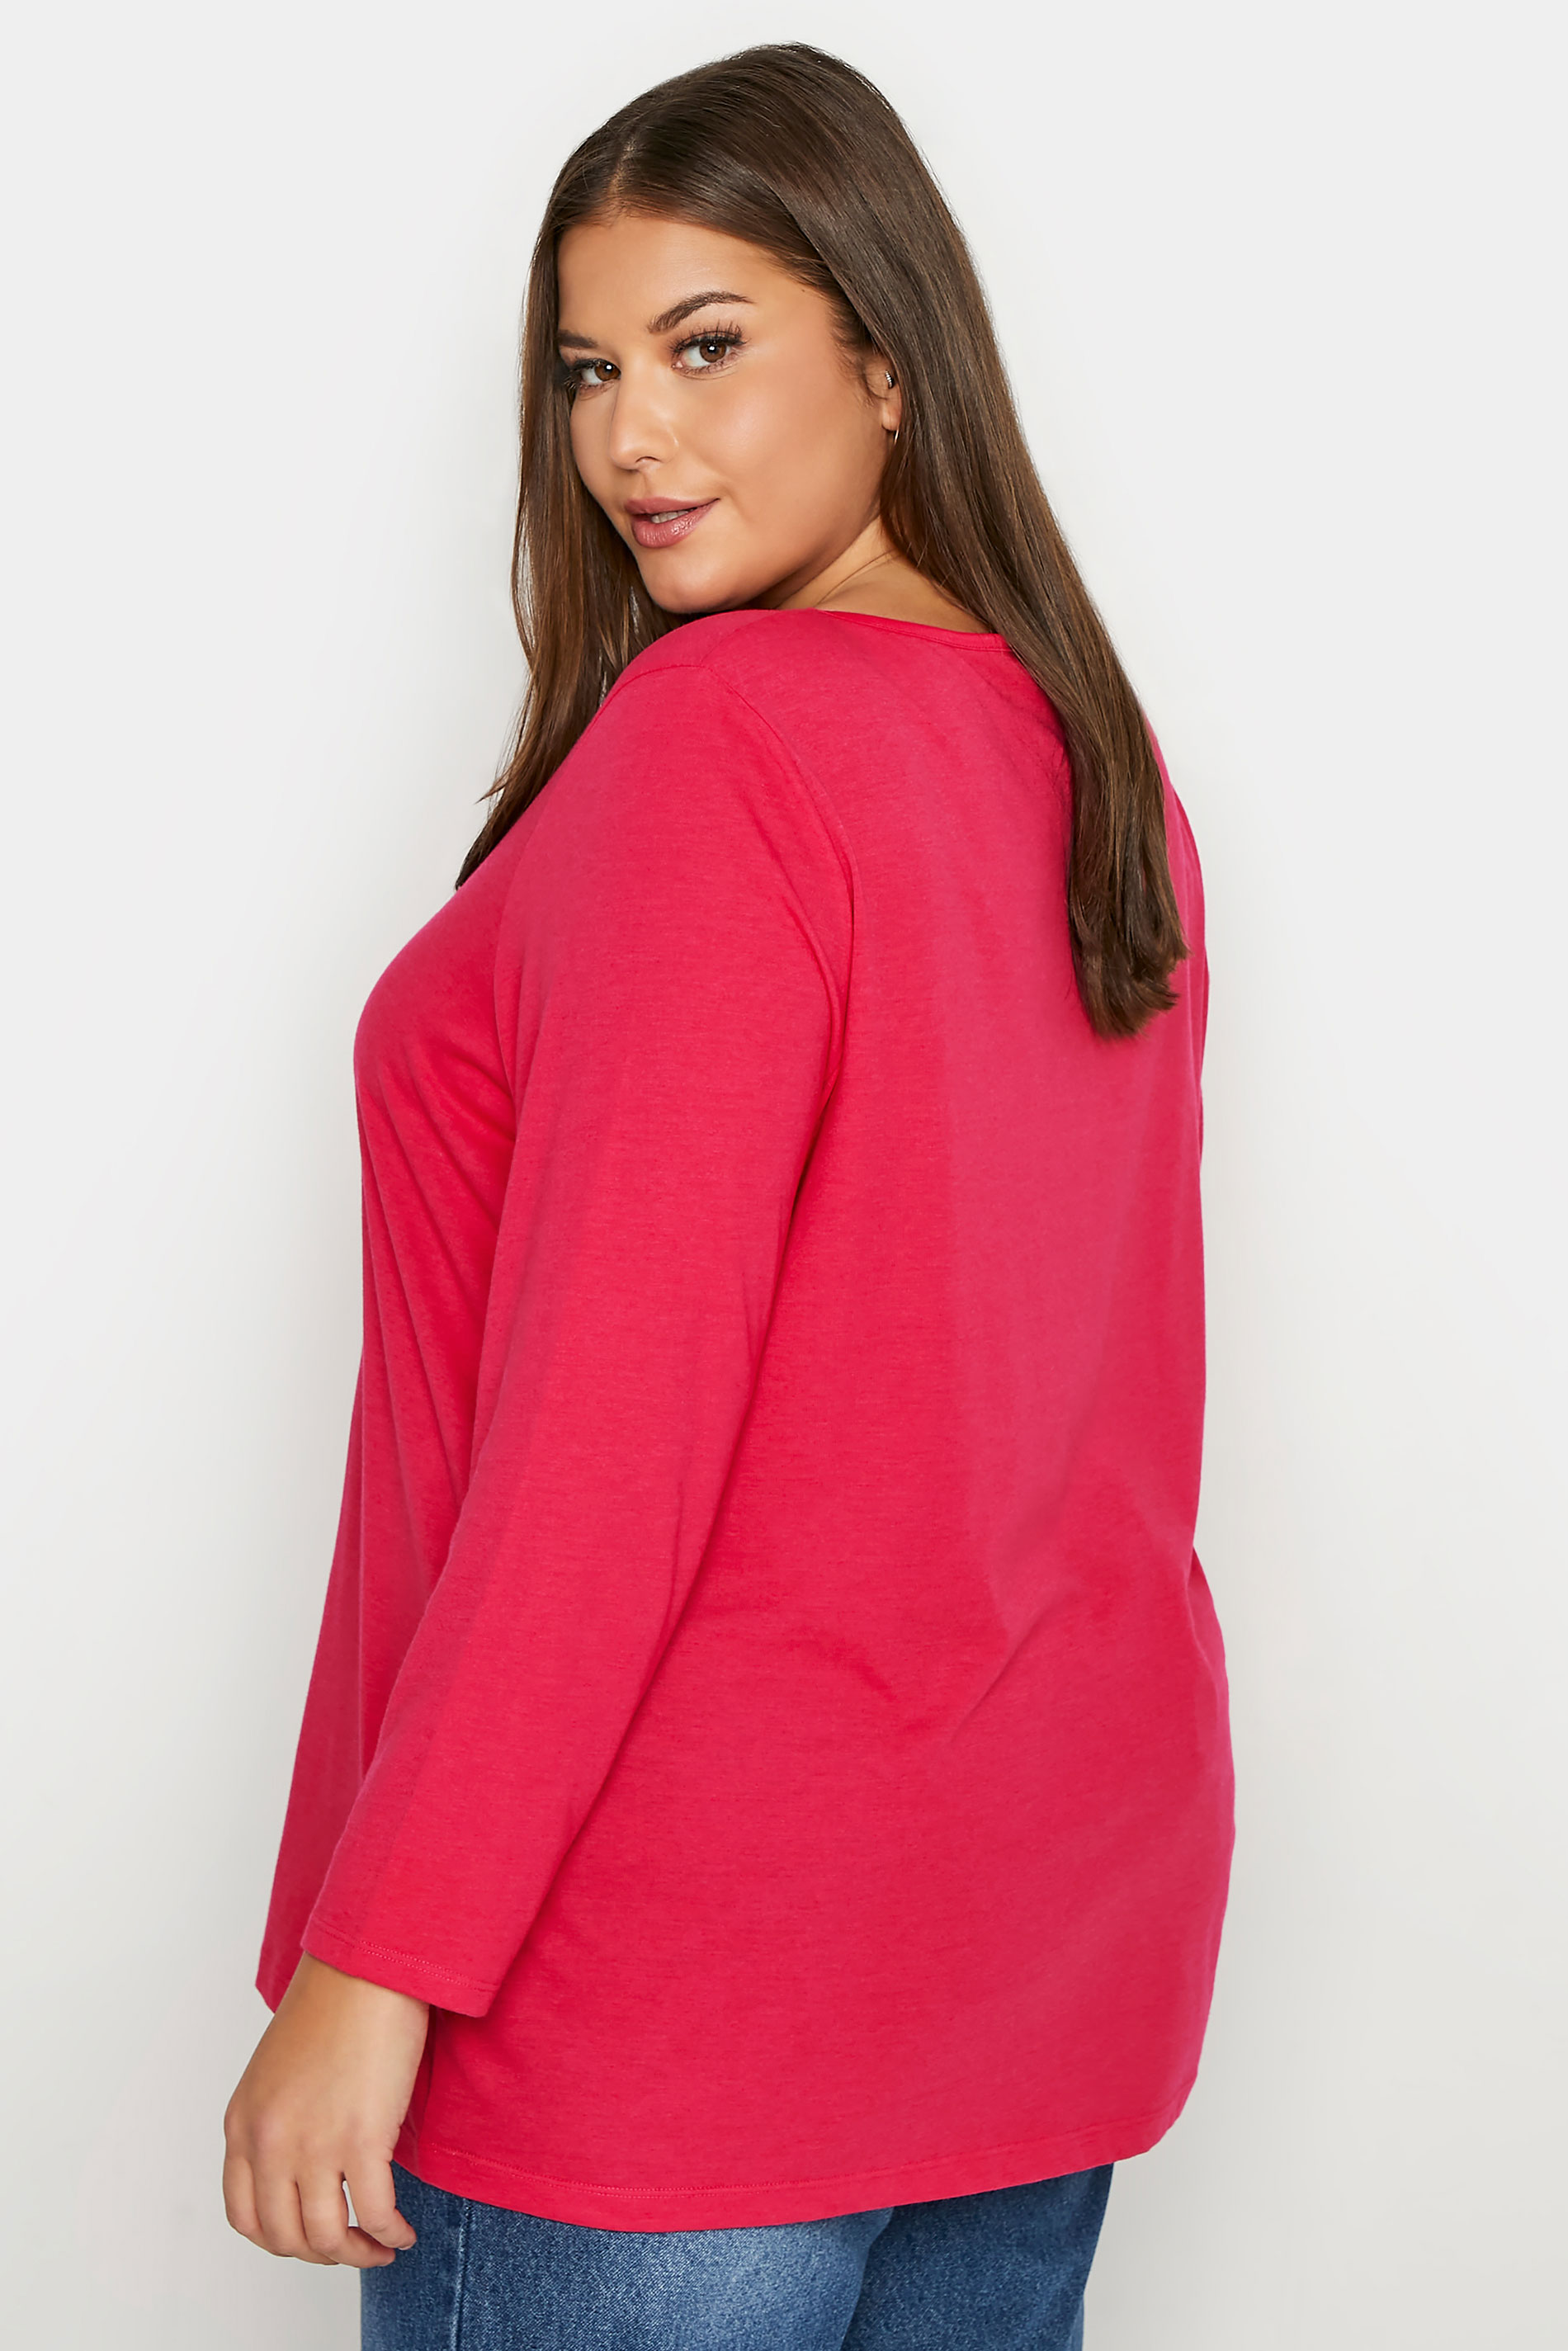 Grande taille  Tops Grande taille  T-Shirts | T-Shirt Rose Foncé Manches Longues en Jersey - XI82234